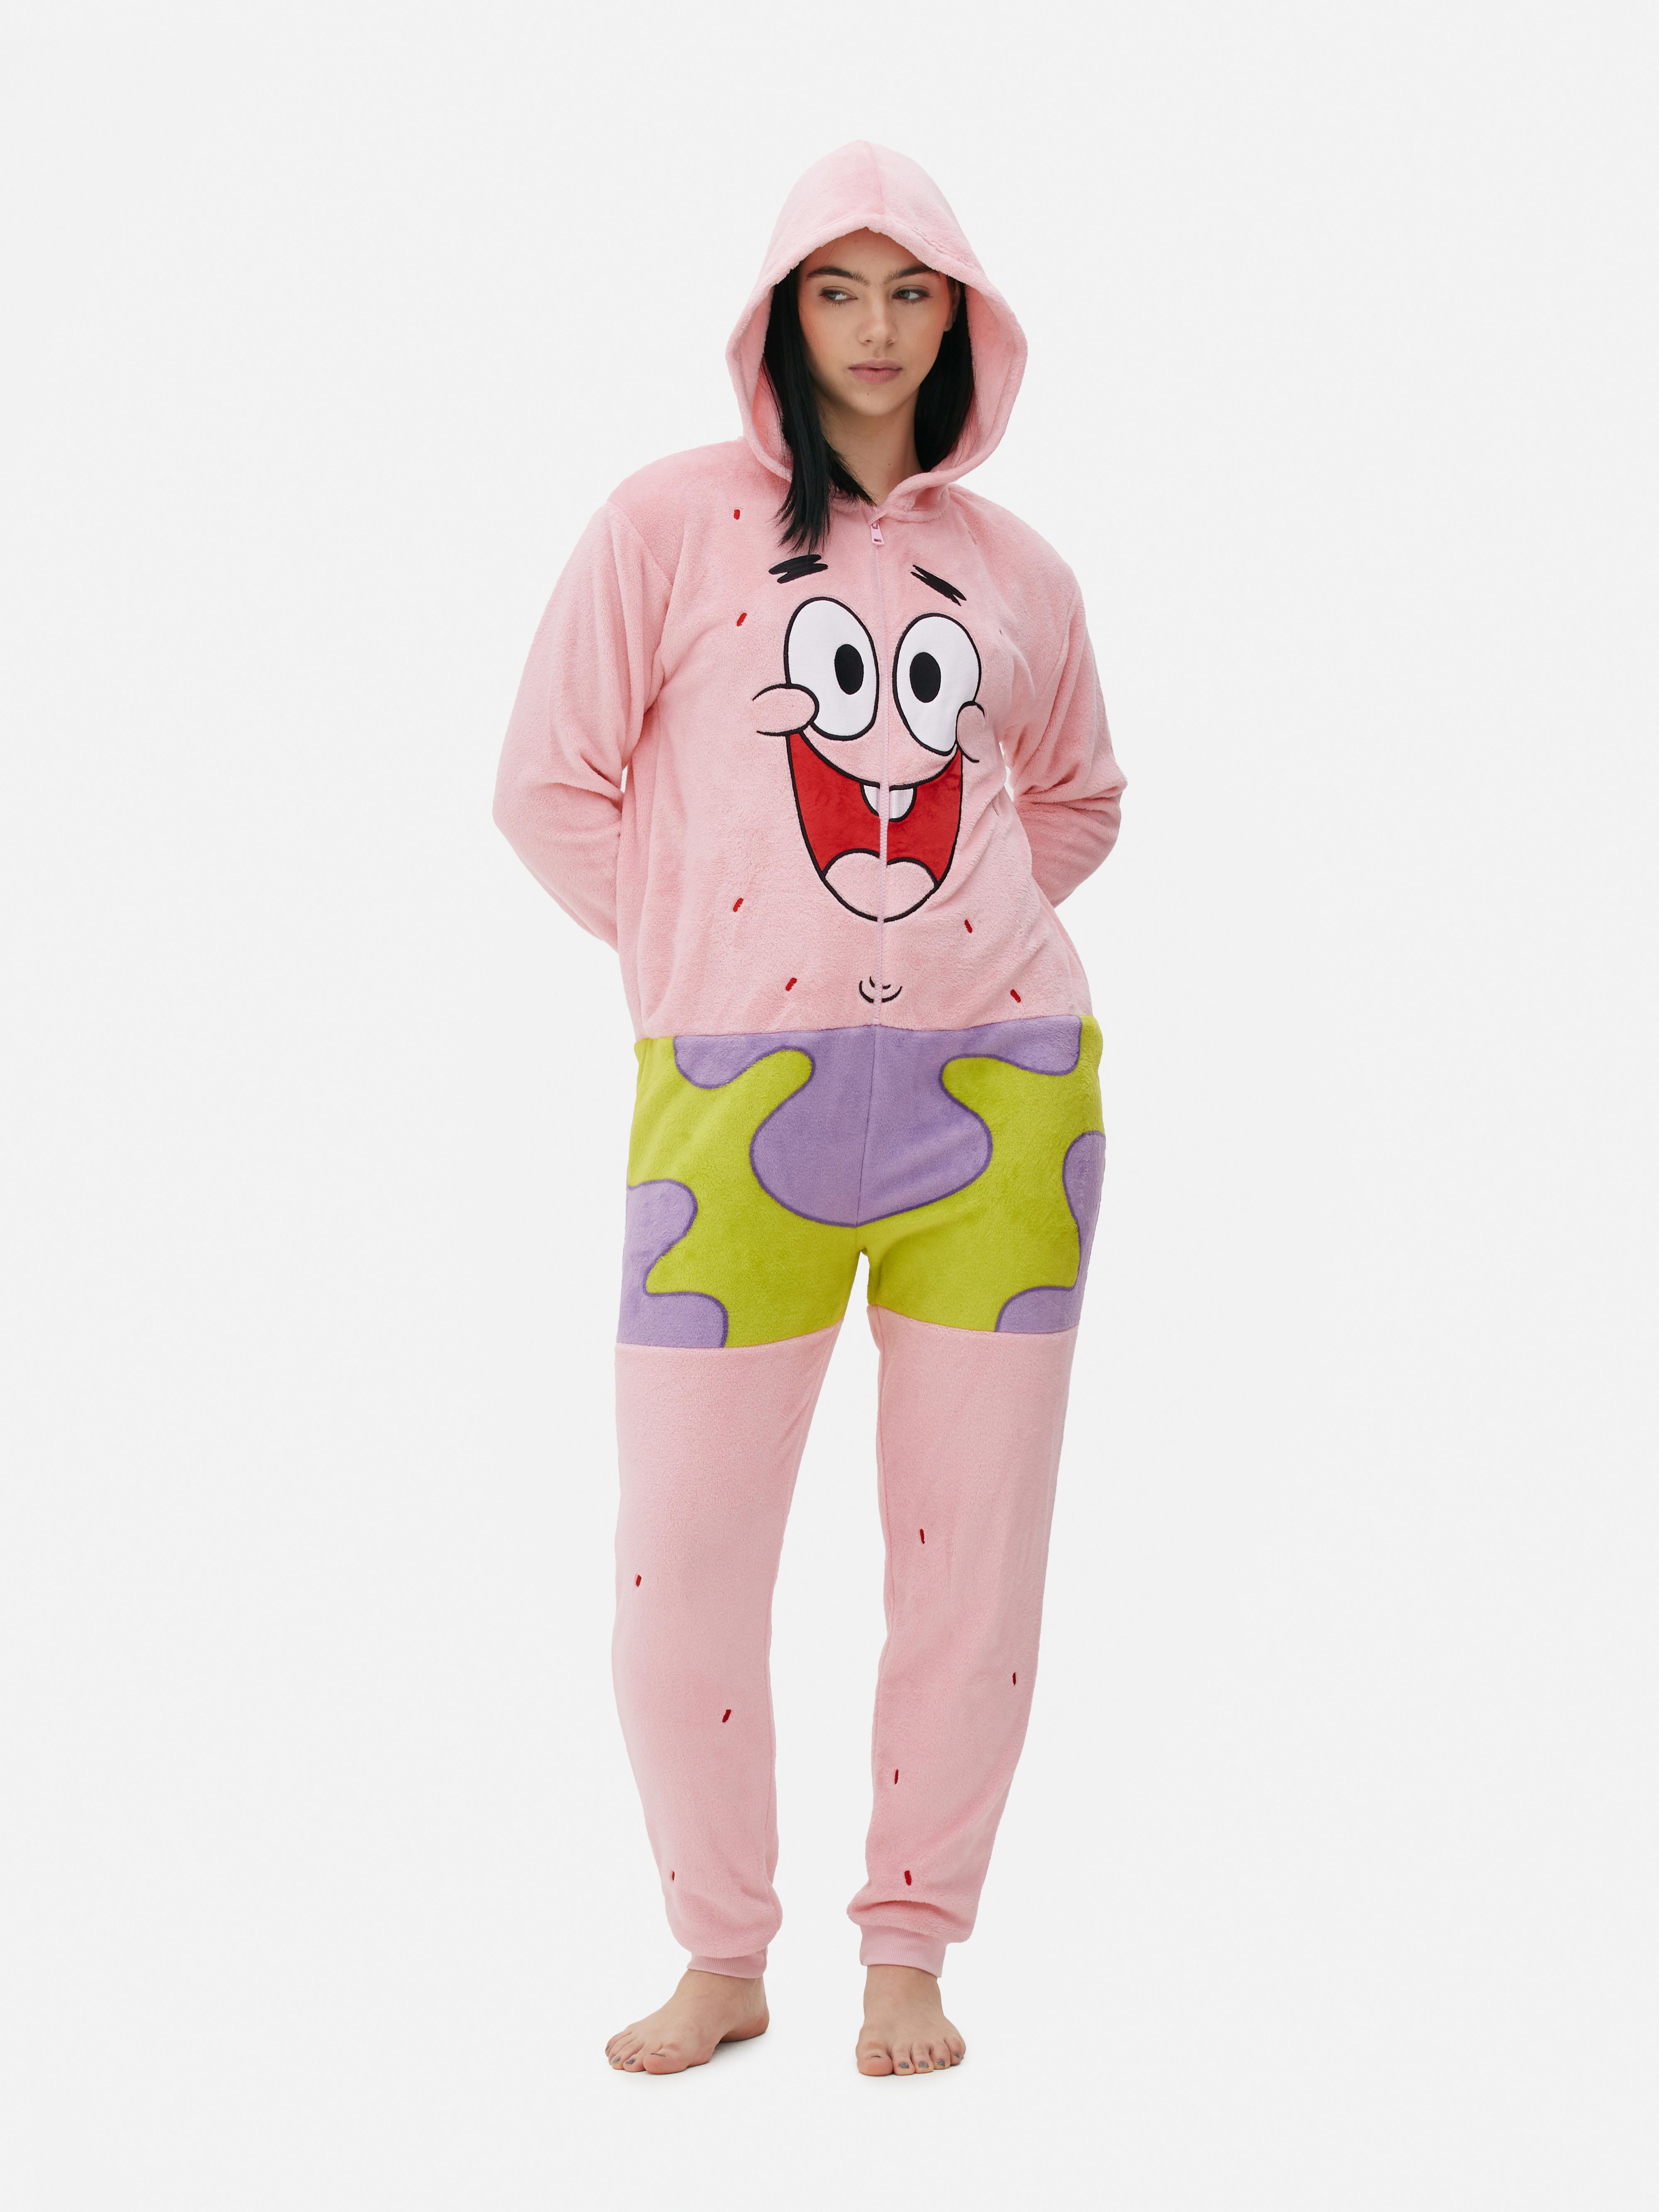 Primark x SpongeBob, SpongeBob SquarePants Clothing